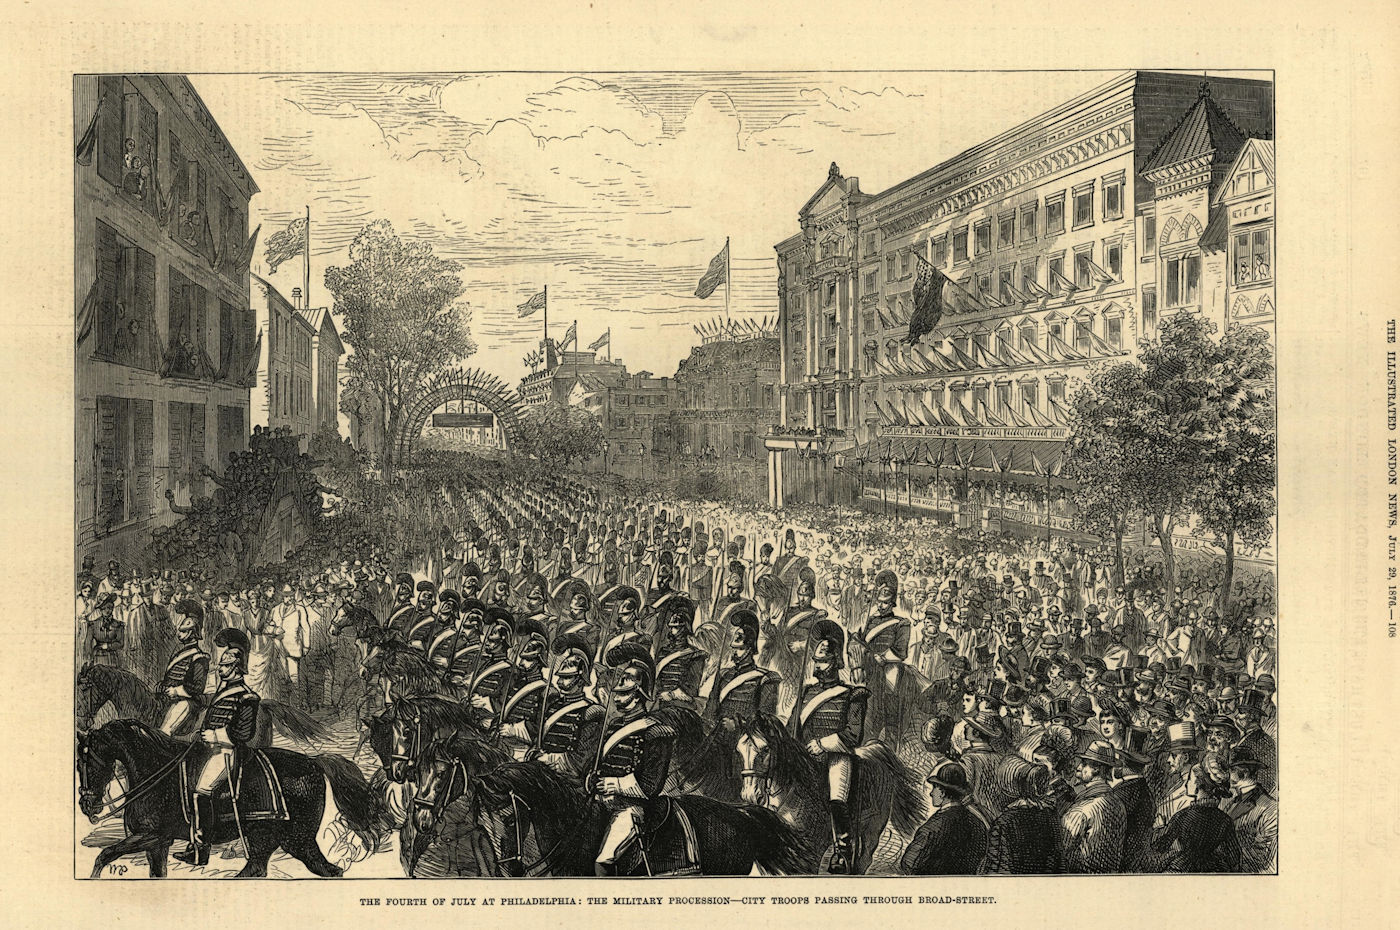 July 4th at Philadelphia: Military parade in Broad Street. Pennsylvania 1876